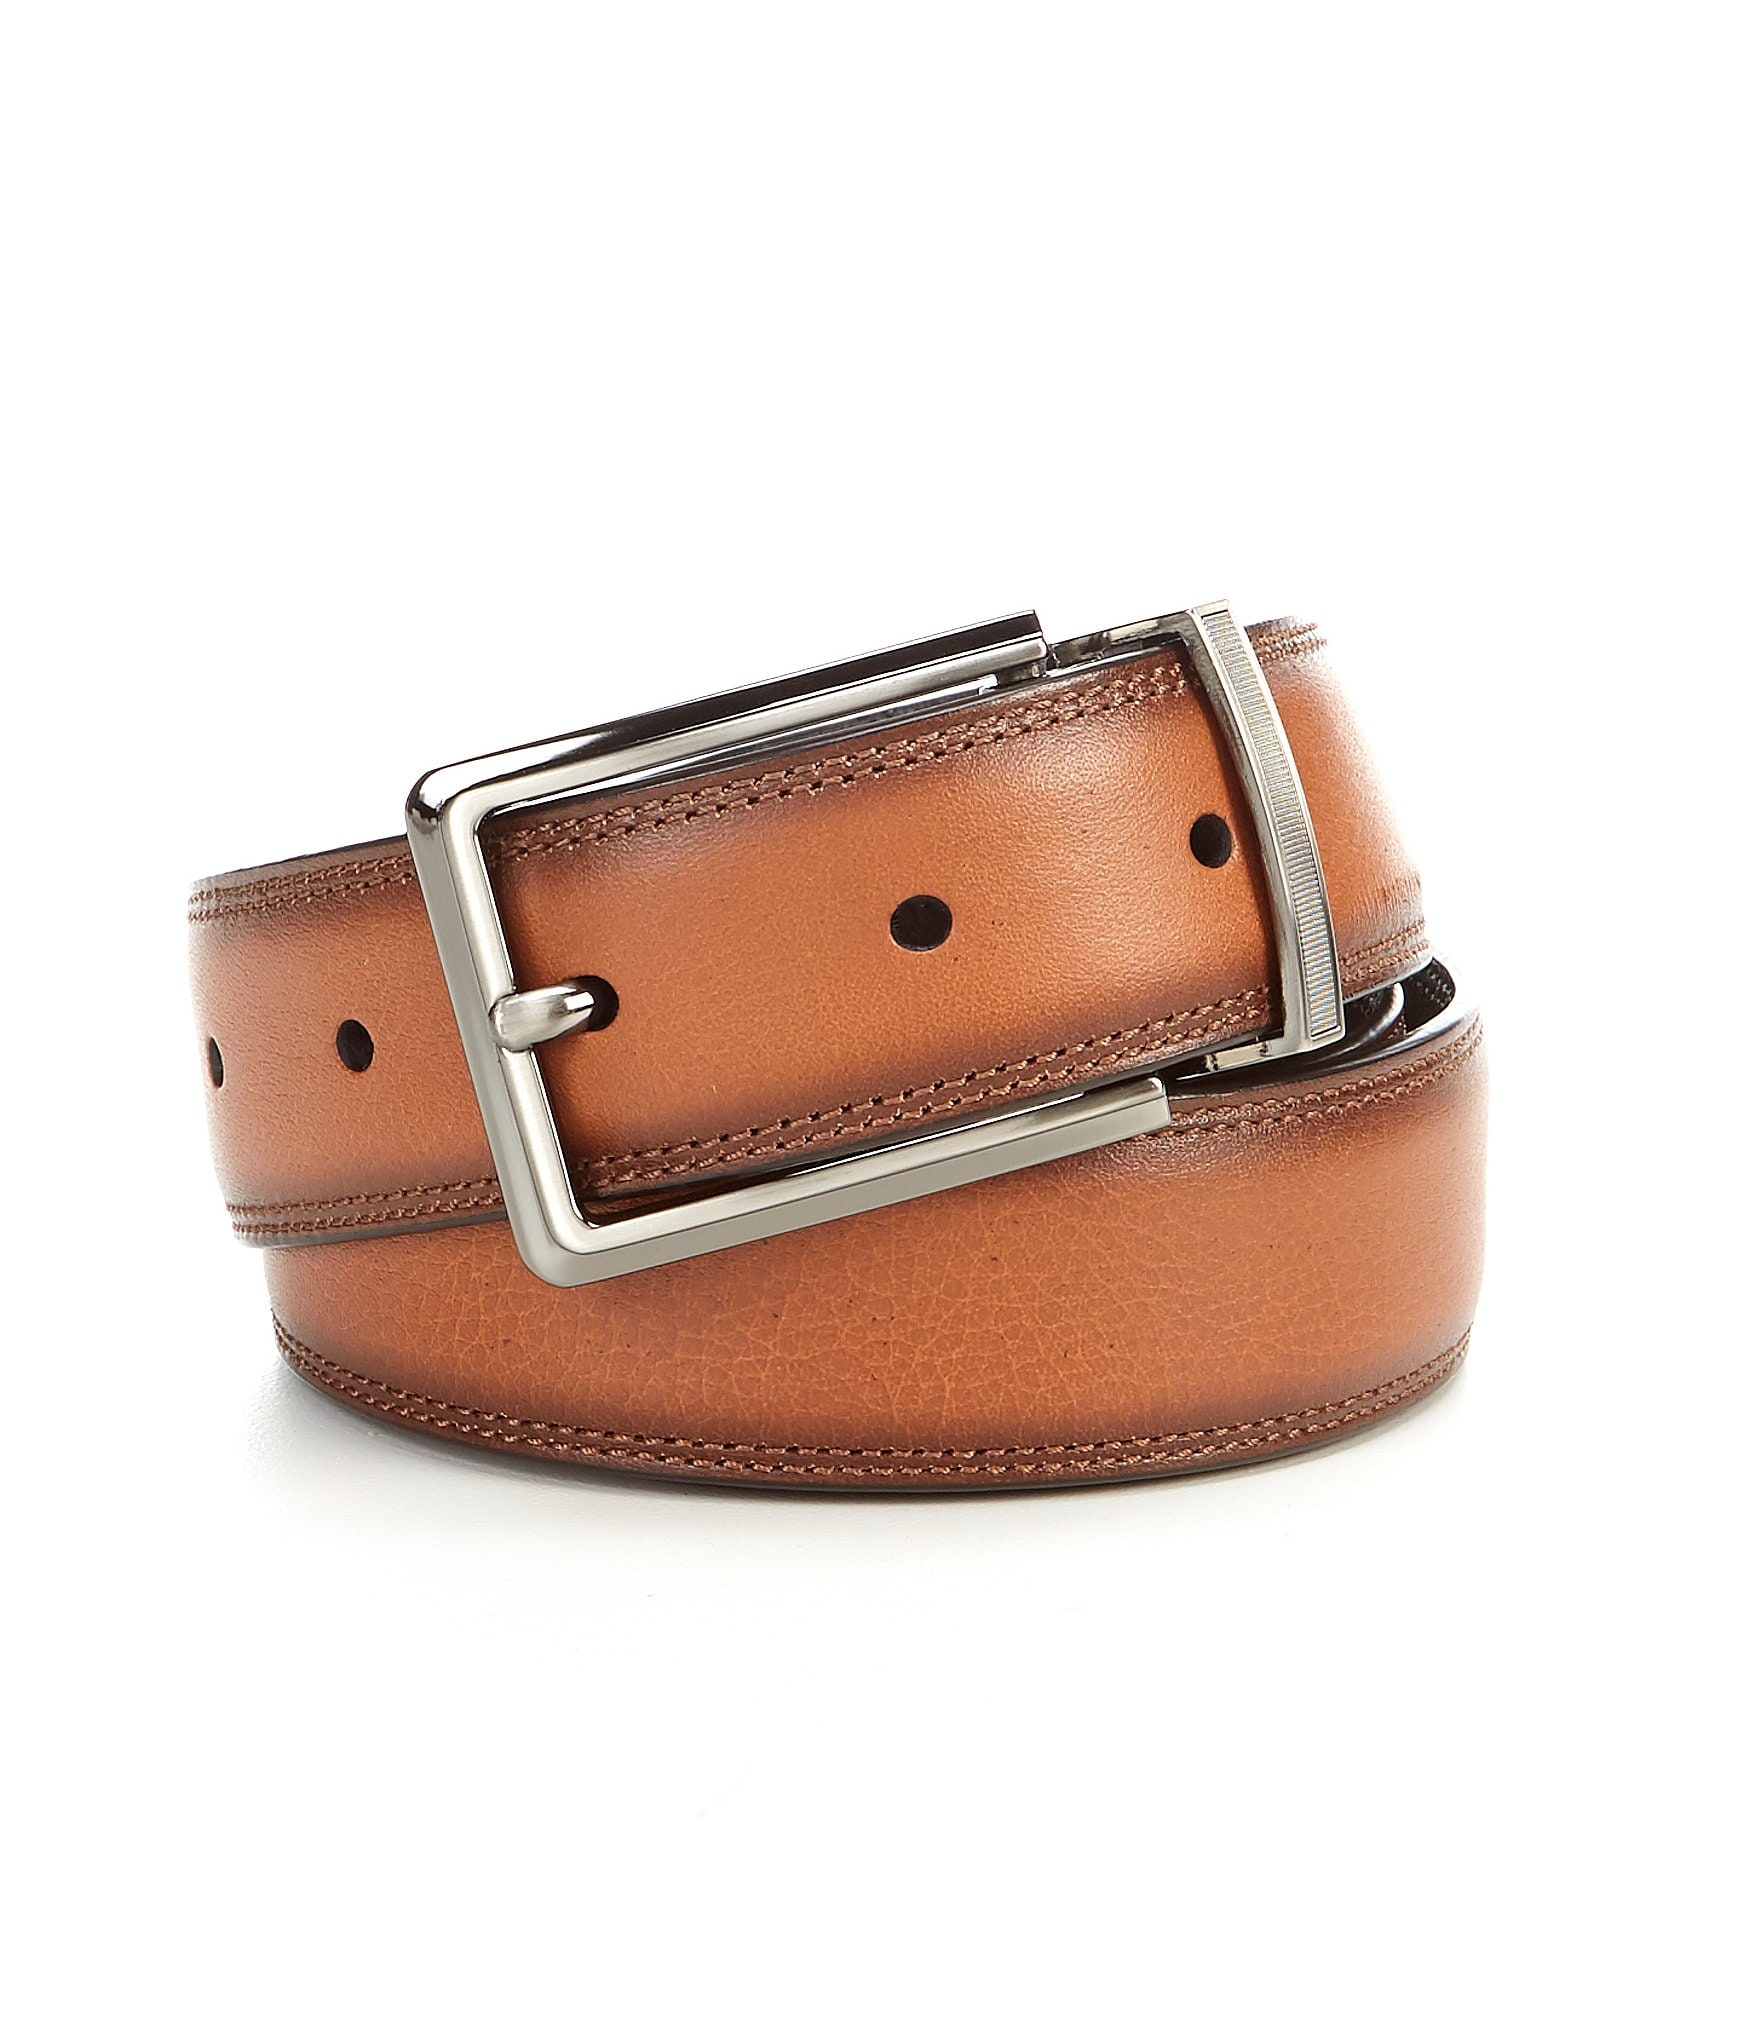 Roundtree & Yorke Men's V-Braided Leather Belt